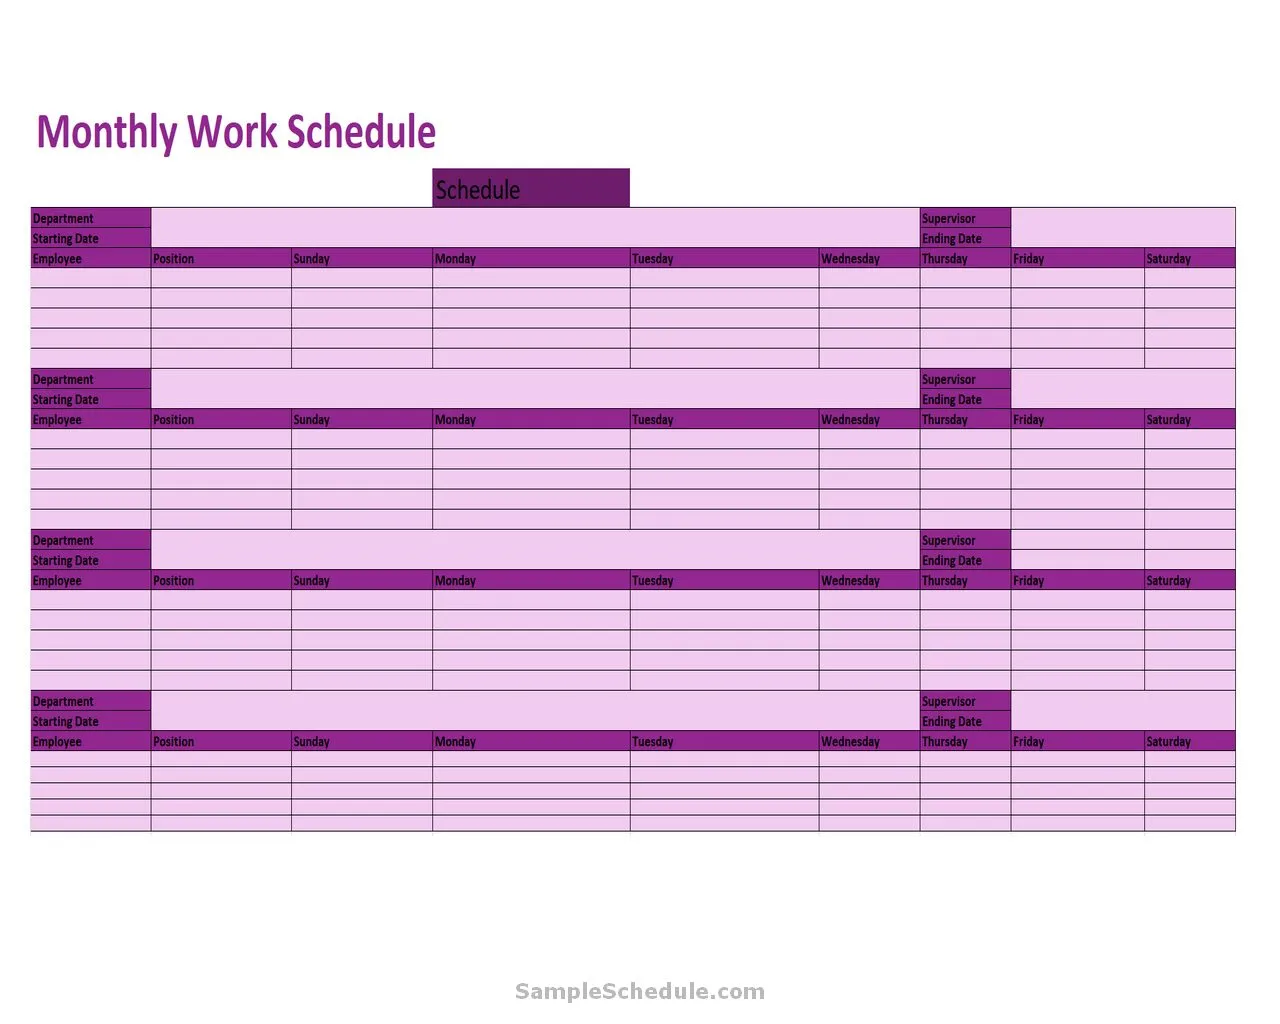 Monthly Work Schedule Template 09